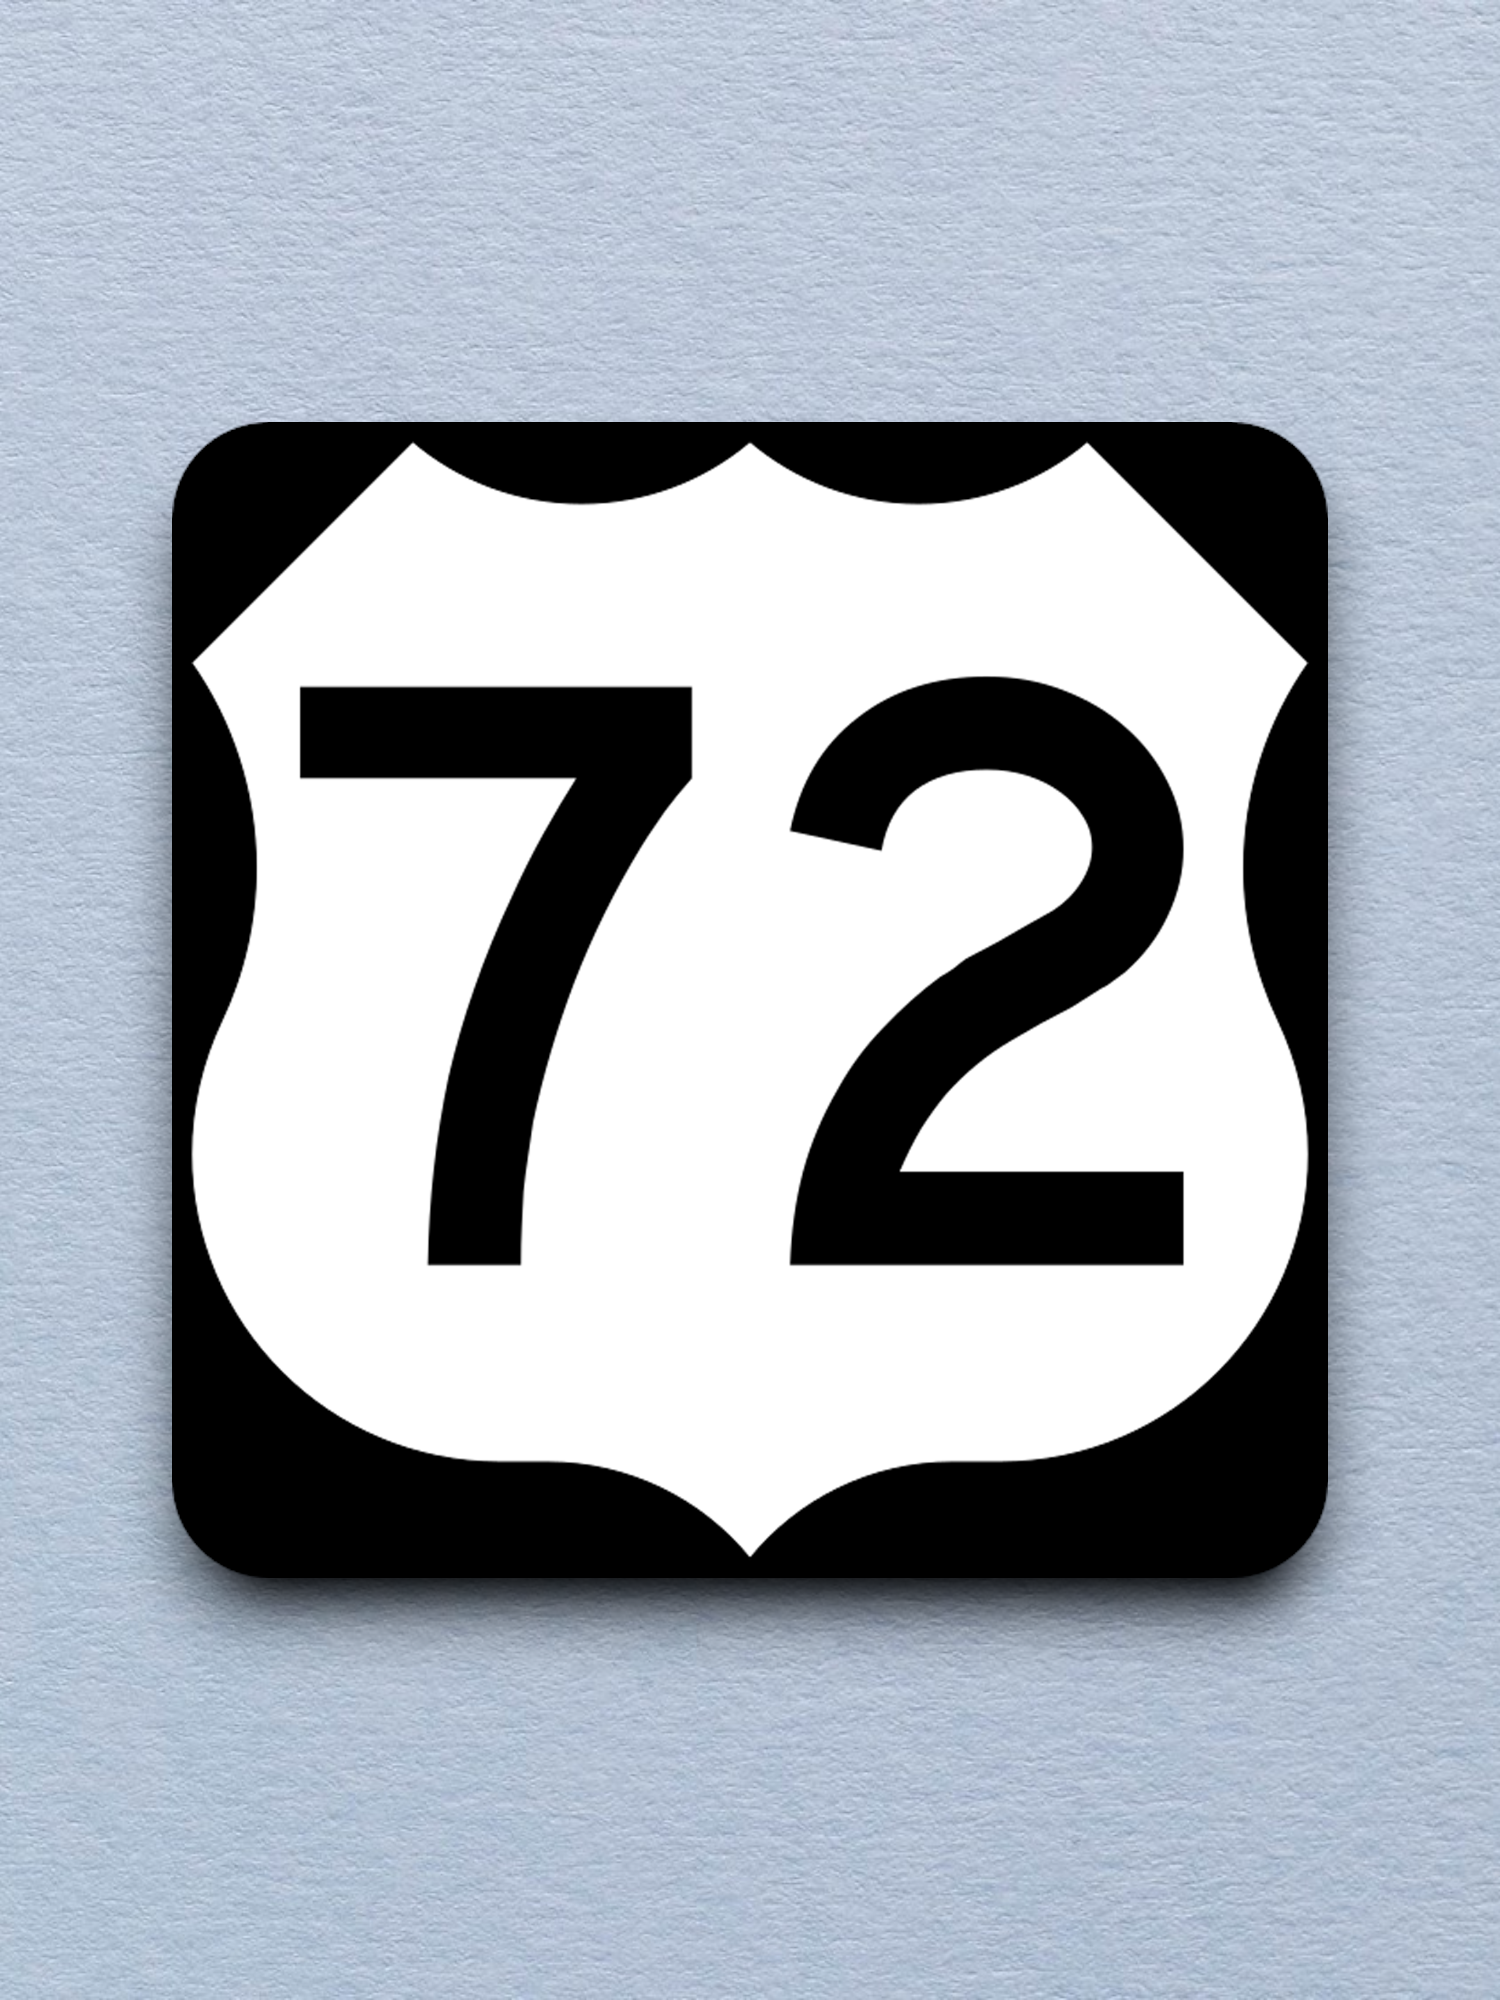 U.S. Route 72 Road Sign Sticker